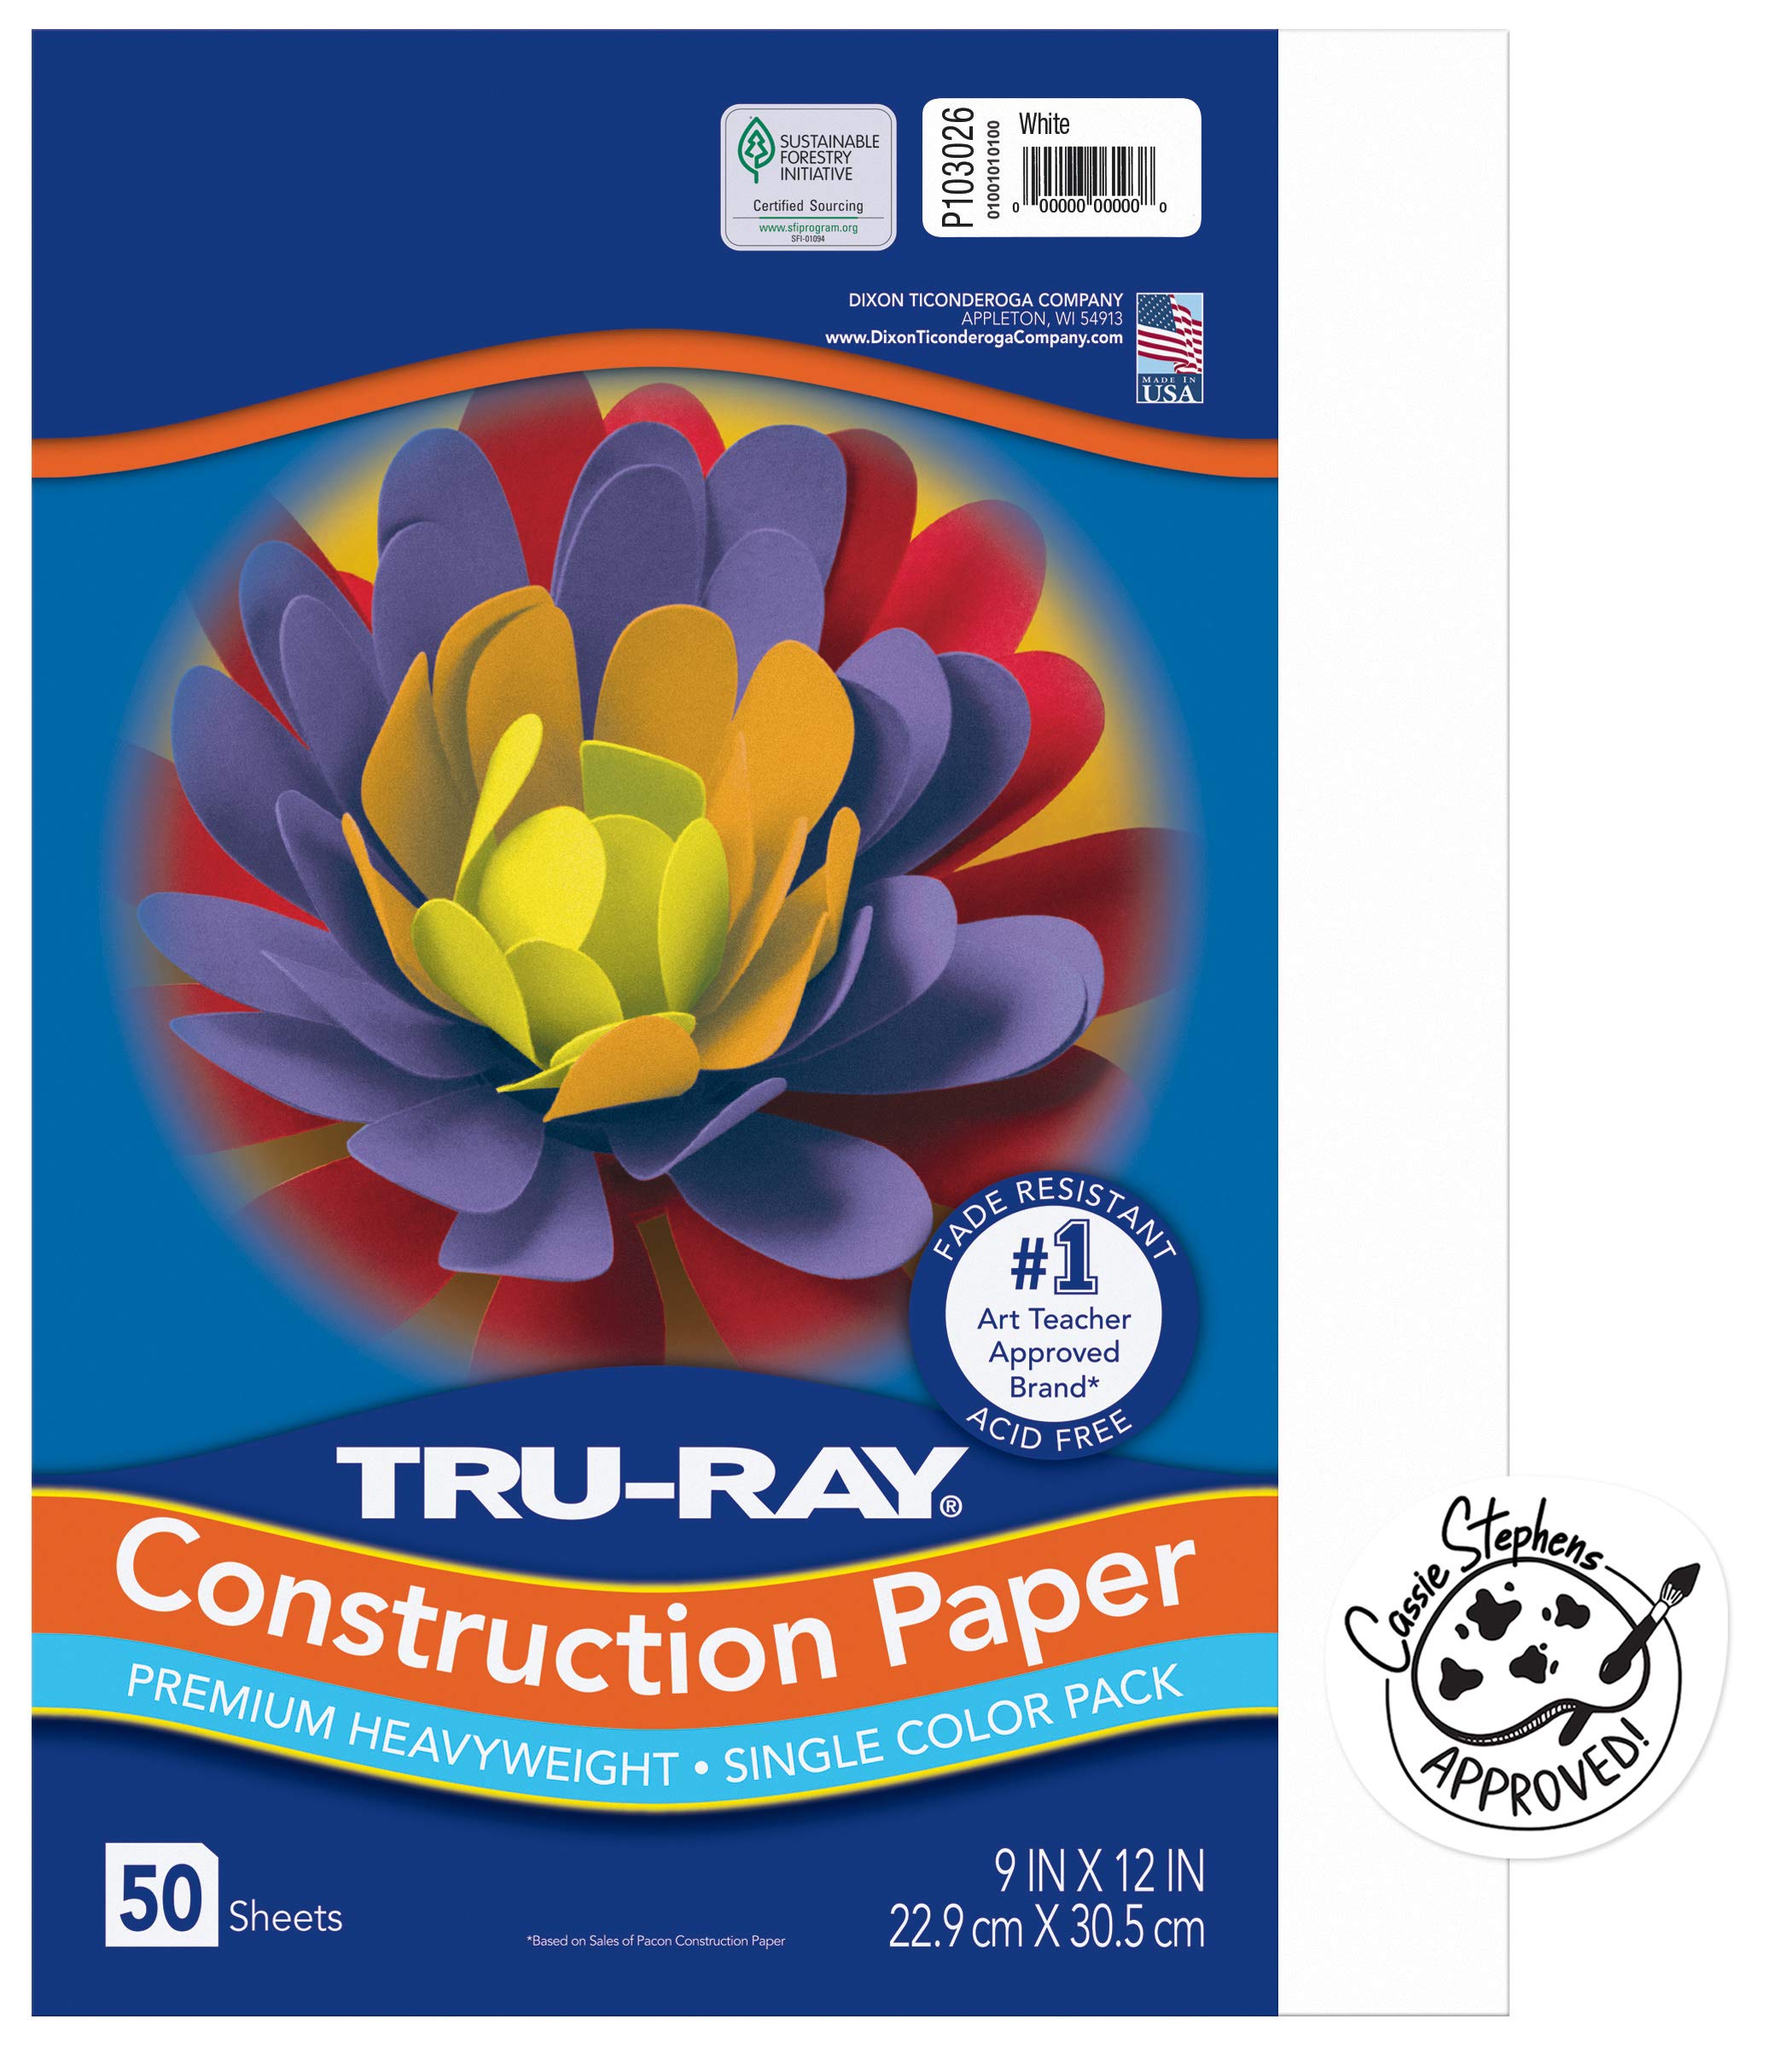 Tru-Ray Heavyweight Construction Paper White 12 x 18 50 Sheets White WHITE  Construction Paper